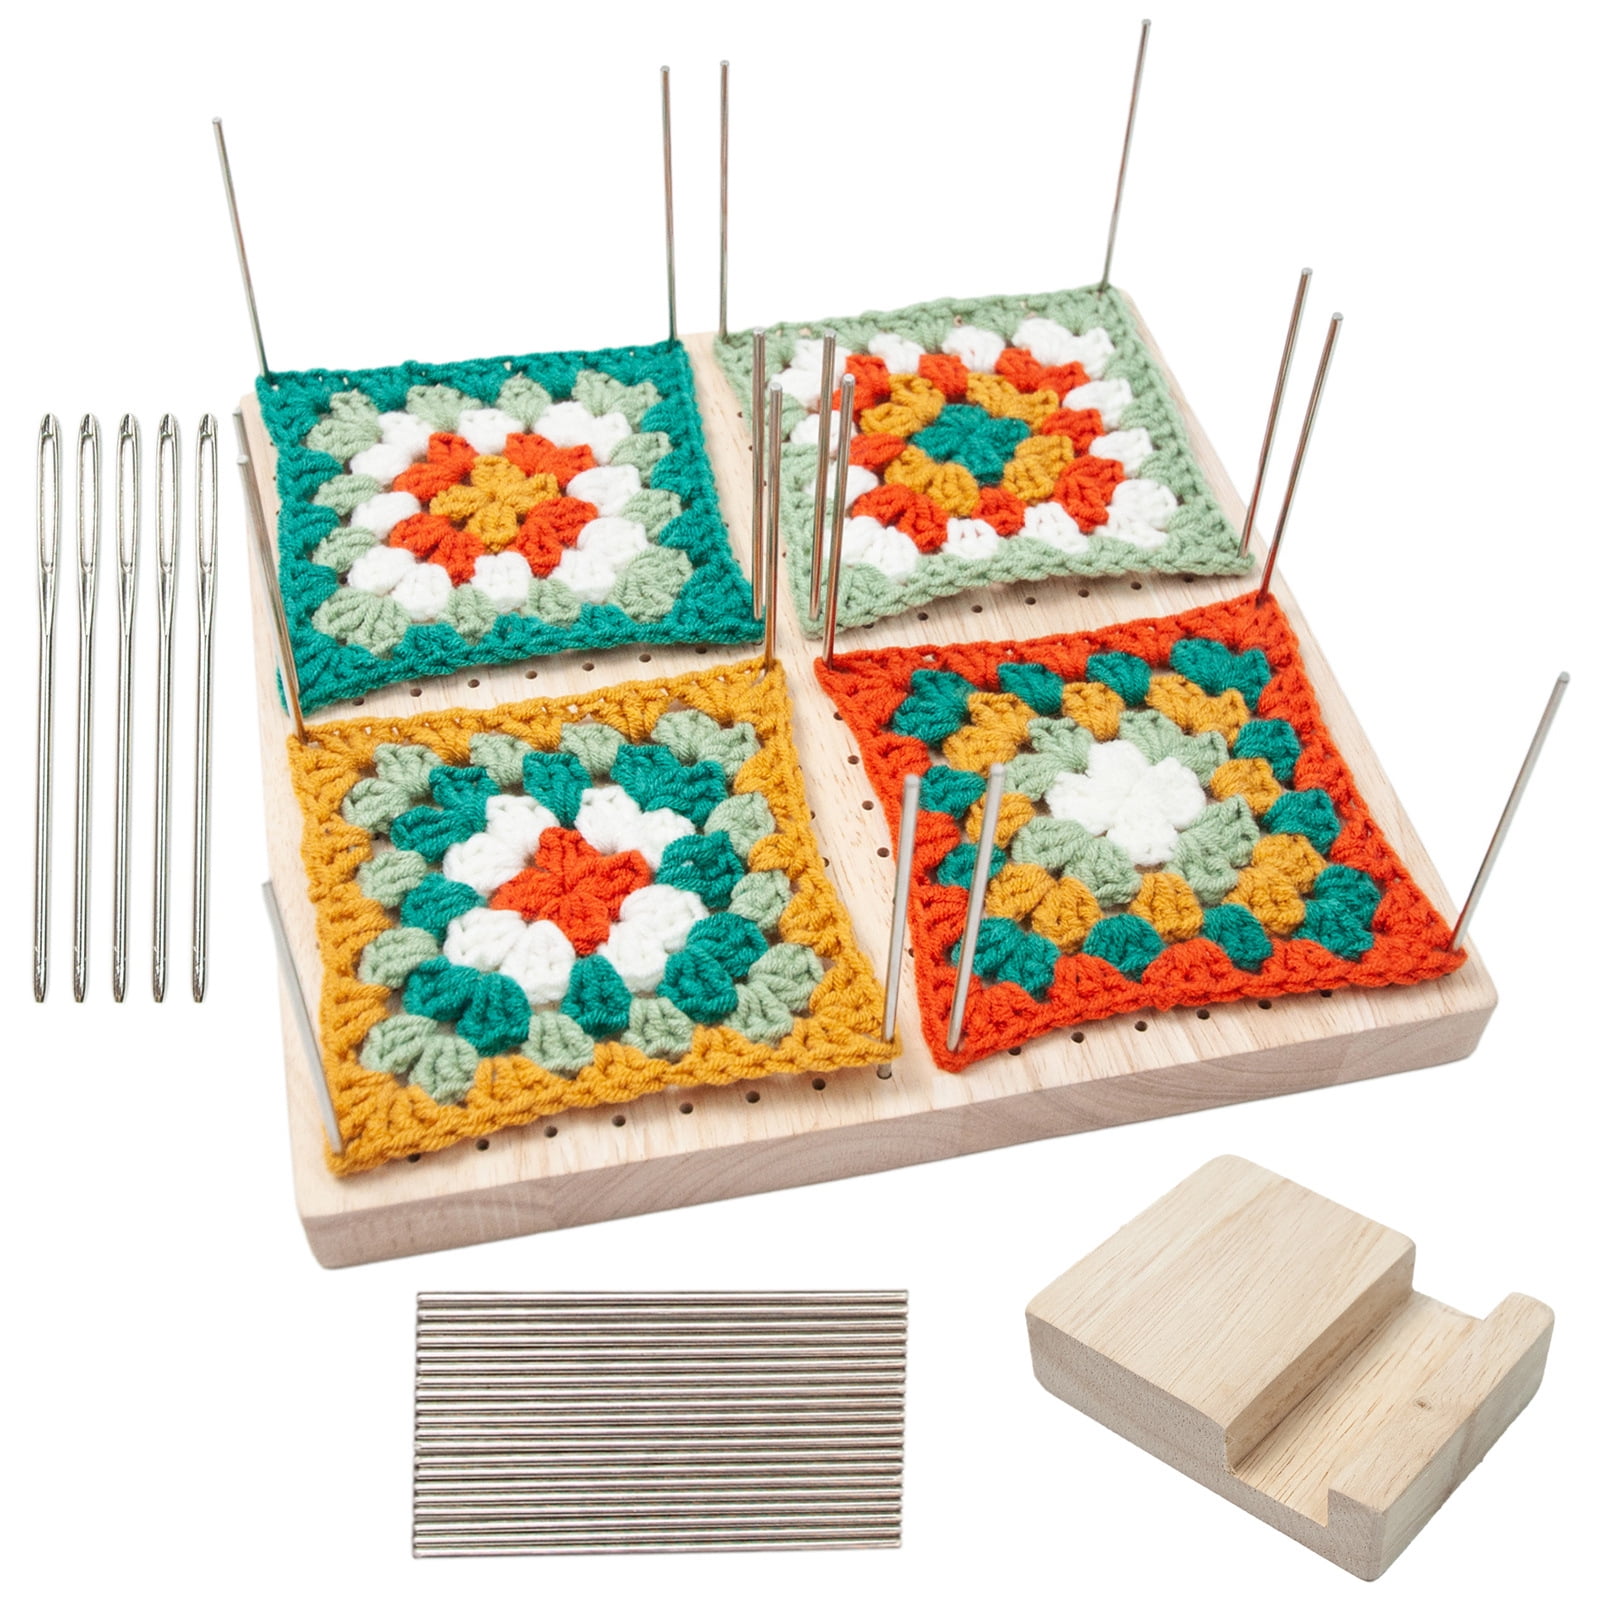  Blocking Mats For Knitting & Crochet Projects Crochet  Blocking Board 9 Pack